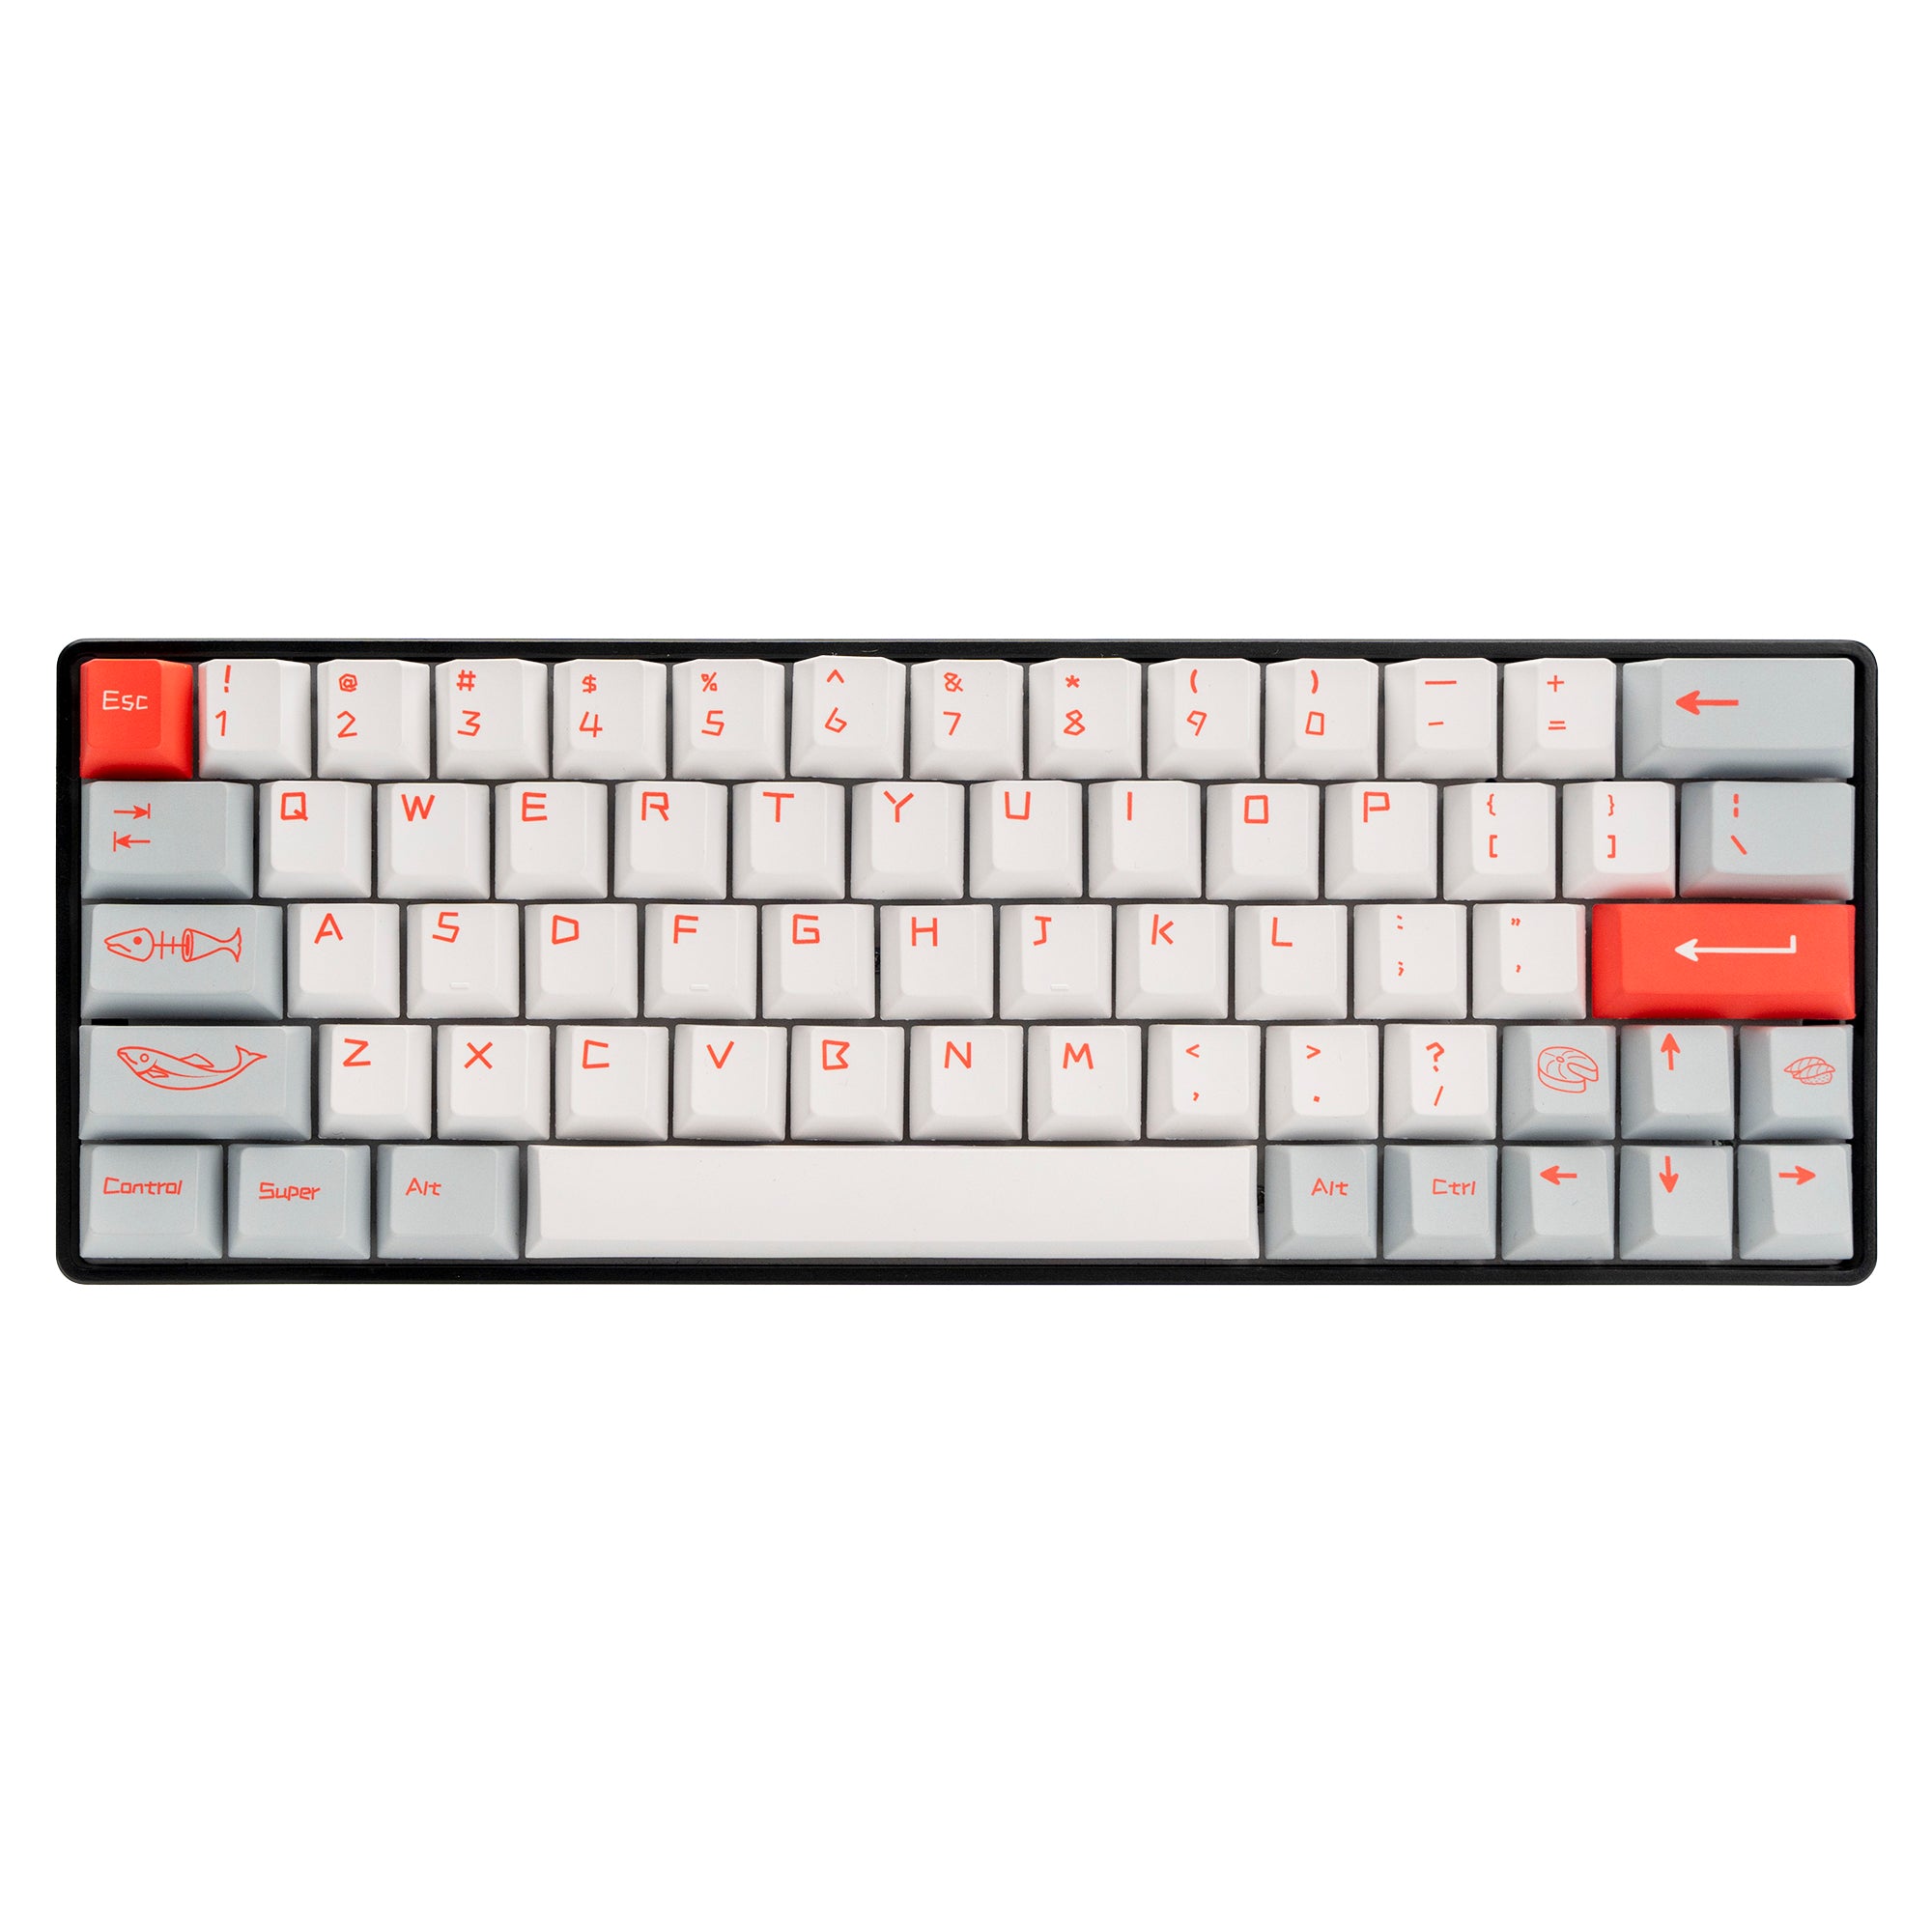 diy-keycaps-salmon-black-white-pbt-tricolor-mechanical-keyboard-keycaps-set